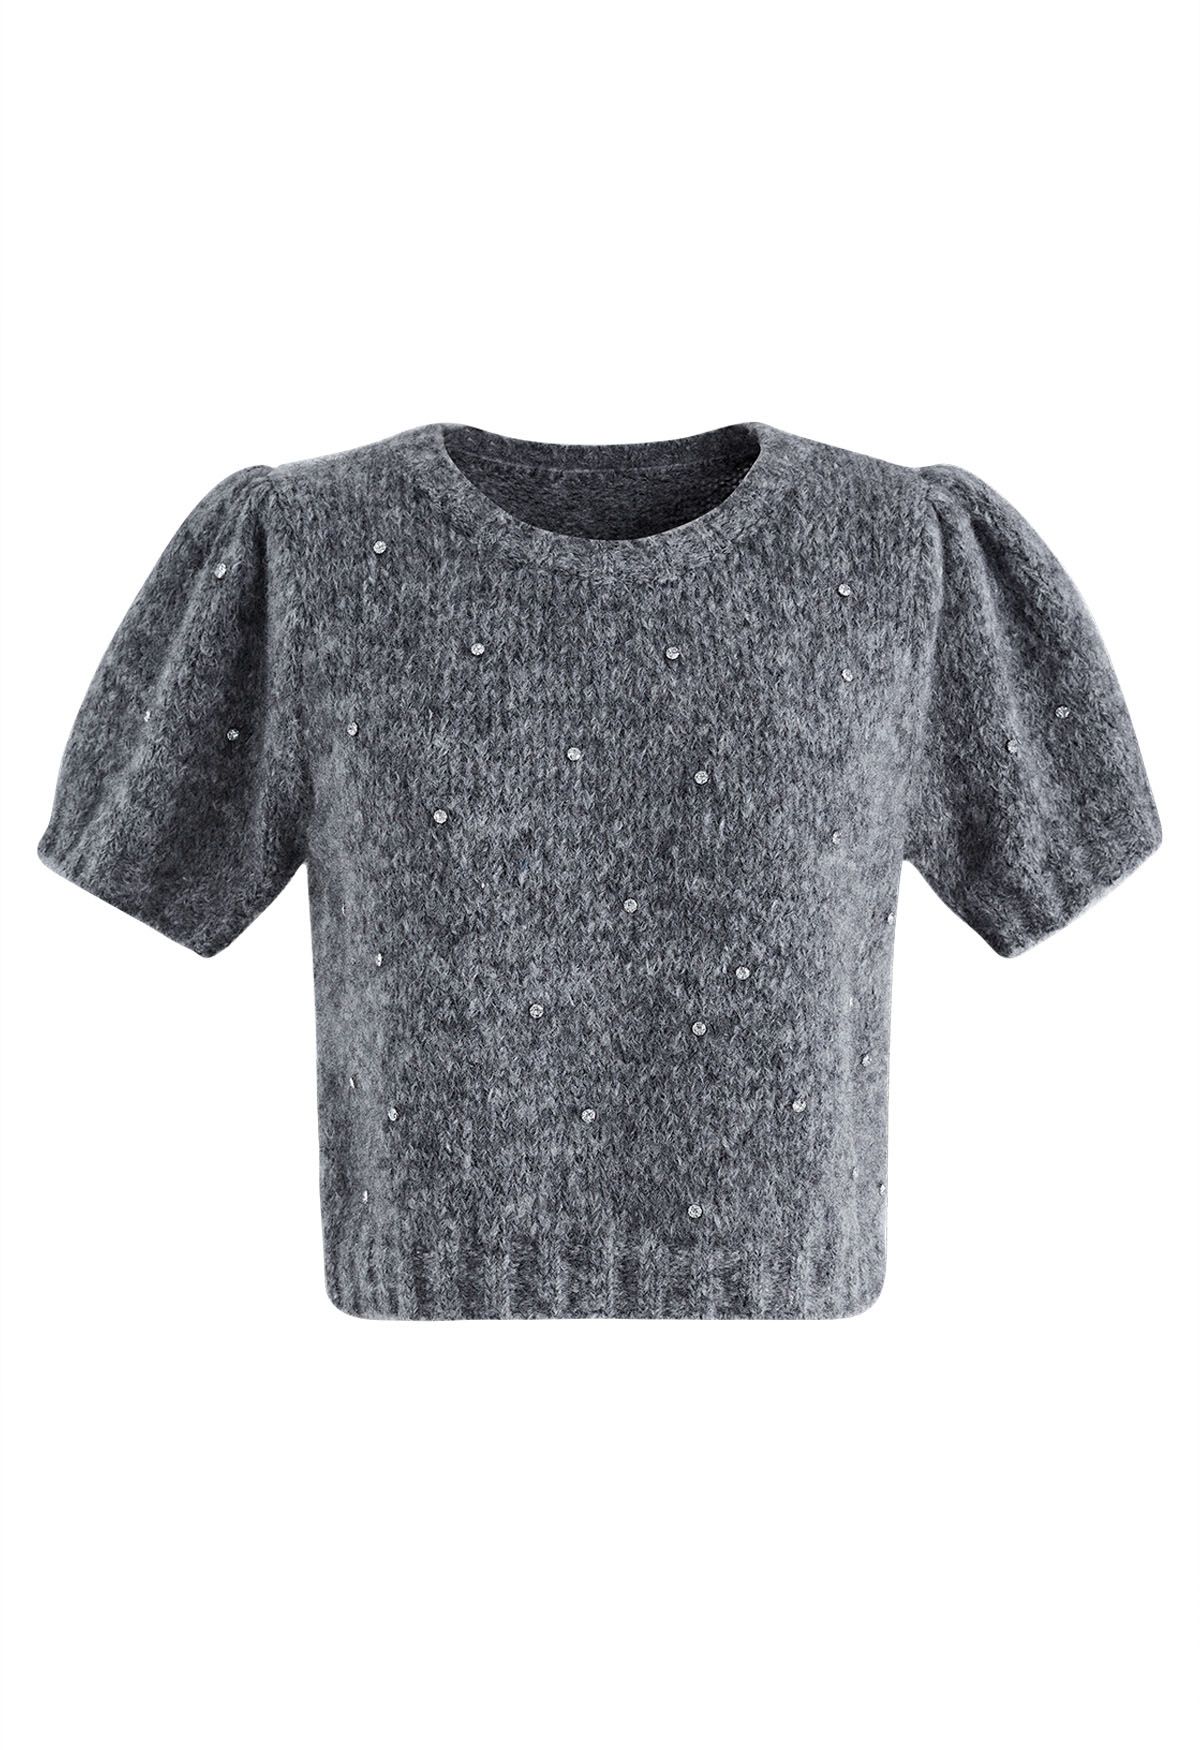 Rhinestone Embellished Fuzzy Knit Sweater in Grey